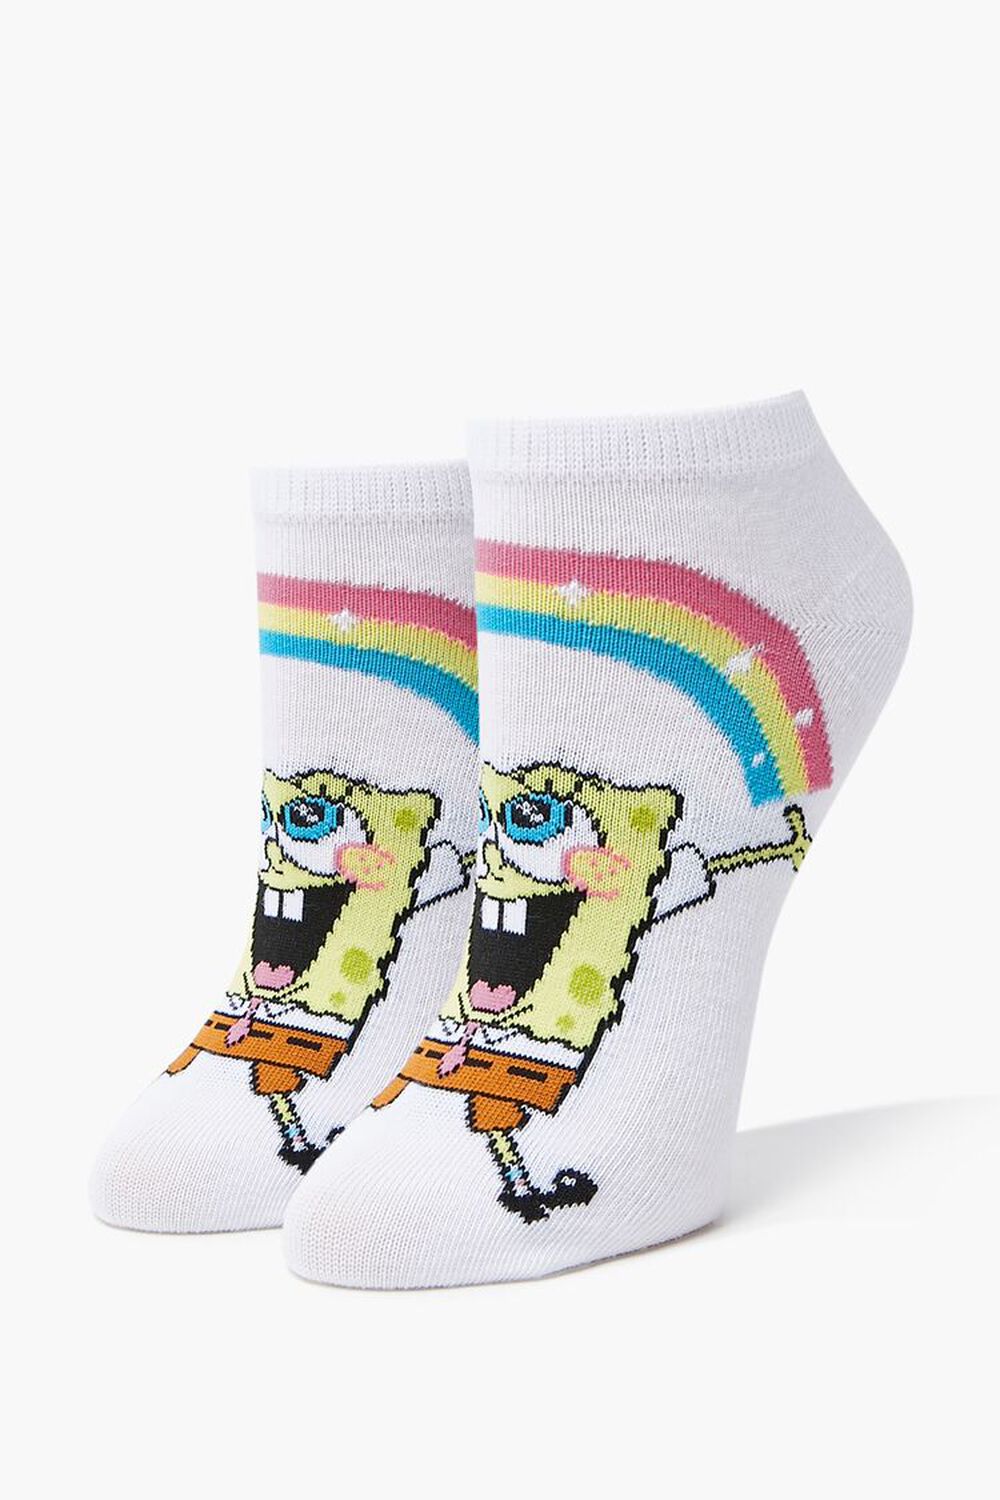 WHITE/MULTI SpongeBob SquarePants Ankle Socks, image 1